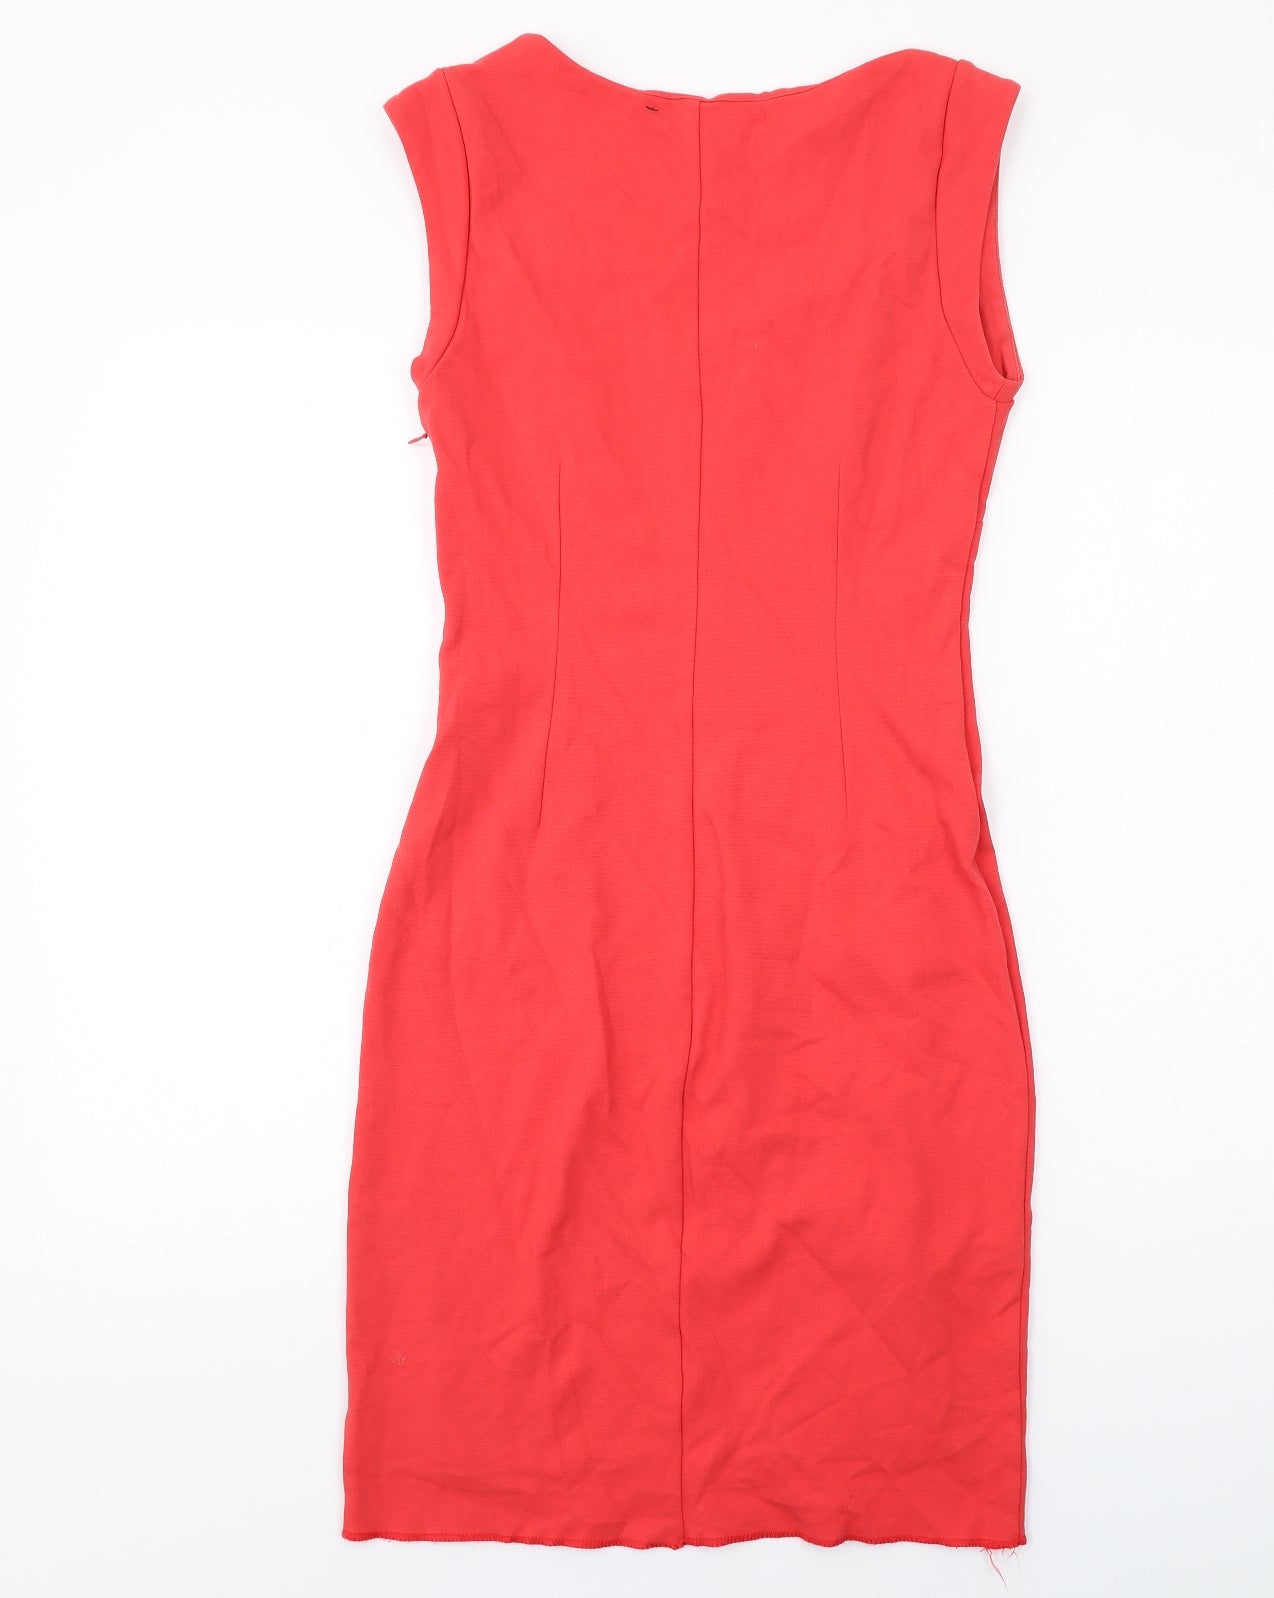 Mango Womens Red Viscose Pencil Dress Size S V-Neck Zip